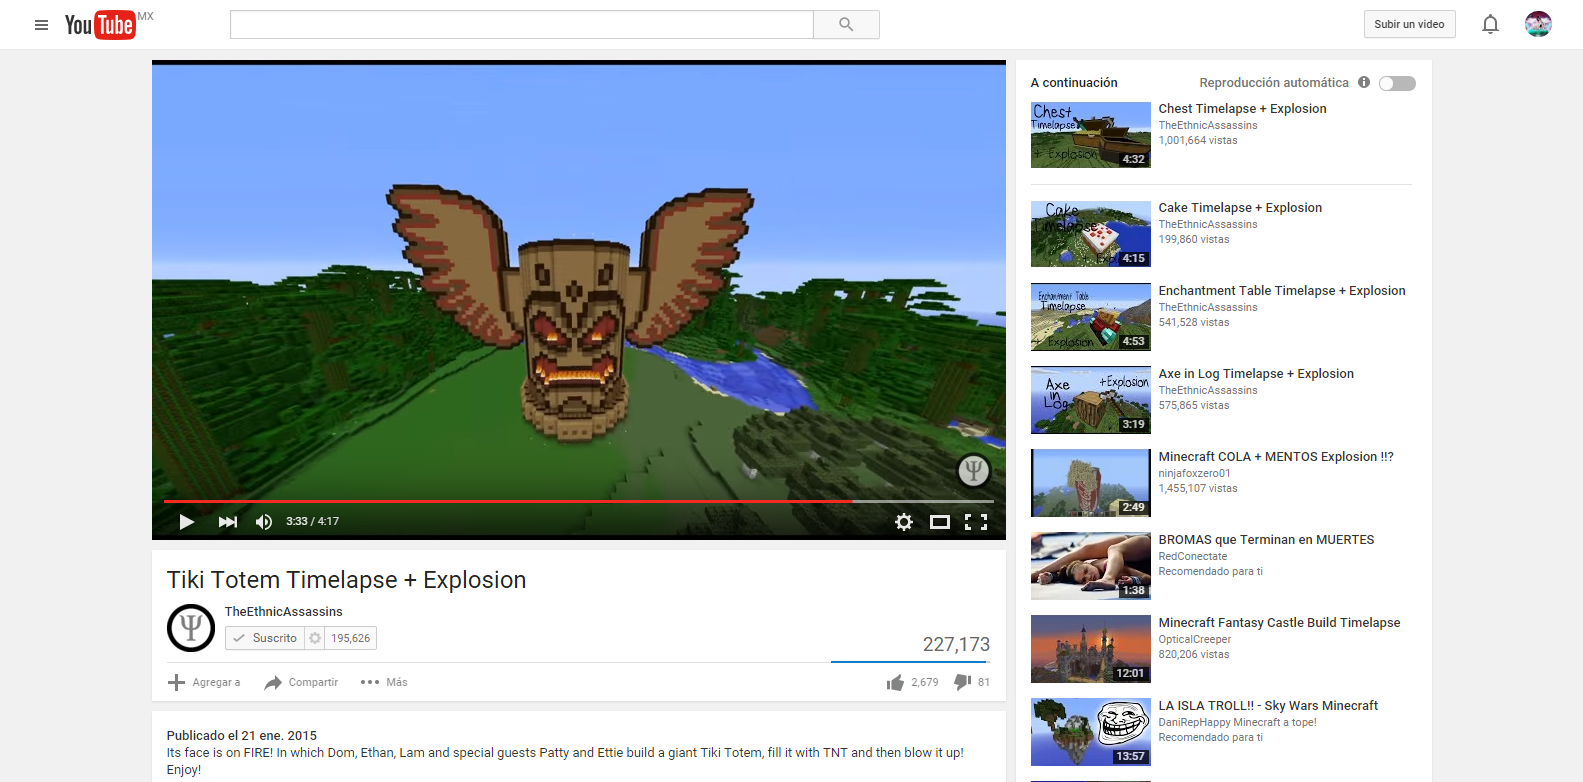 Tiki Totem Timelapse   Explosion   YouTube.png